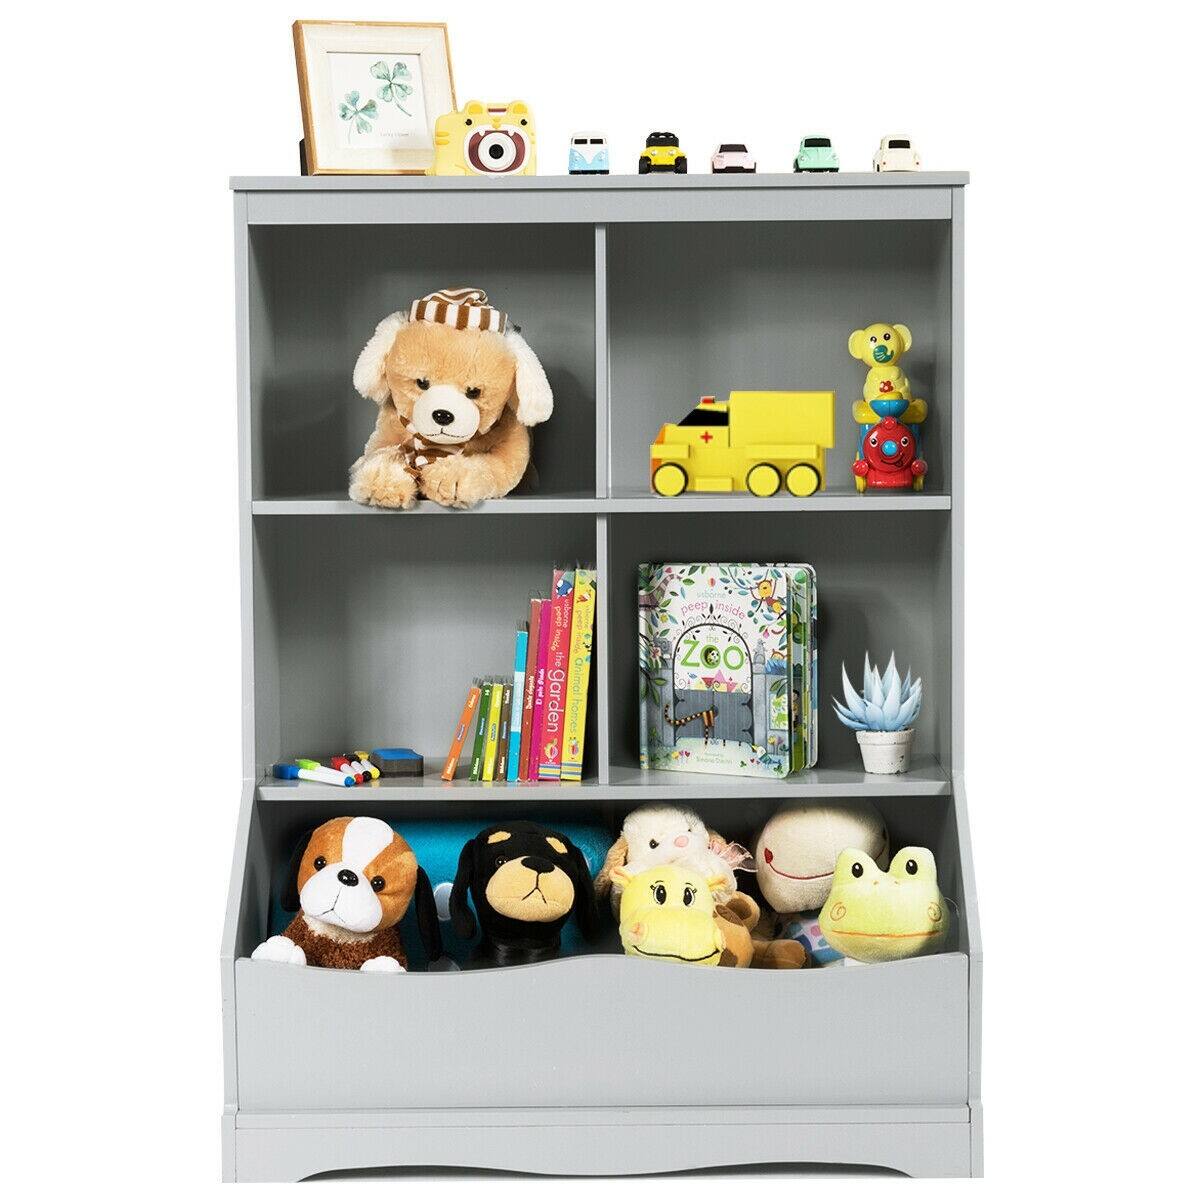 Costway 3-Tier Children's Multi-Functional Bookcase Toy Storage Bin Floor Cabinet $88.95 + Free Shipping